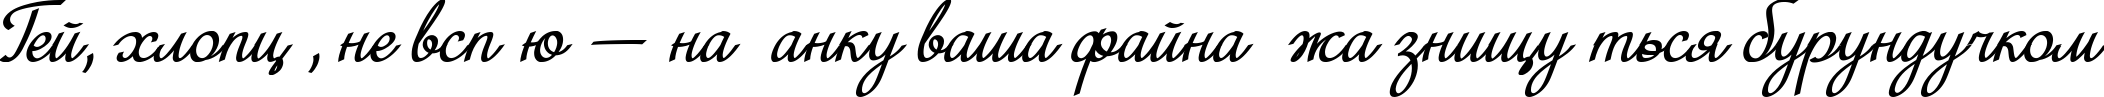 Пример написания шрифтом Mini текста на украинском